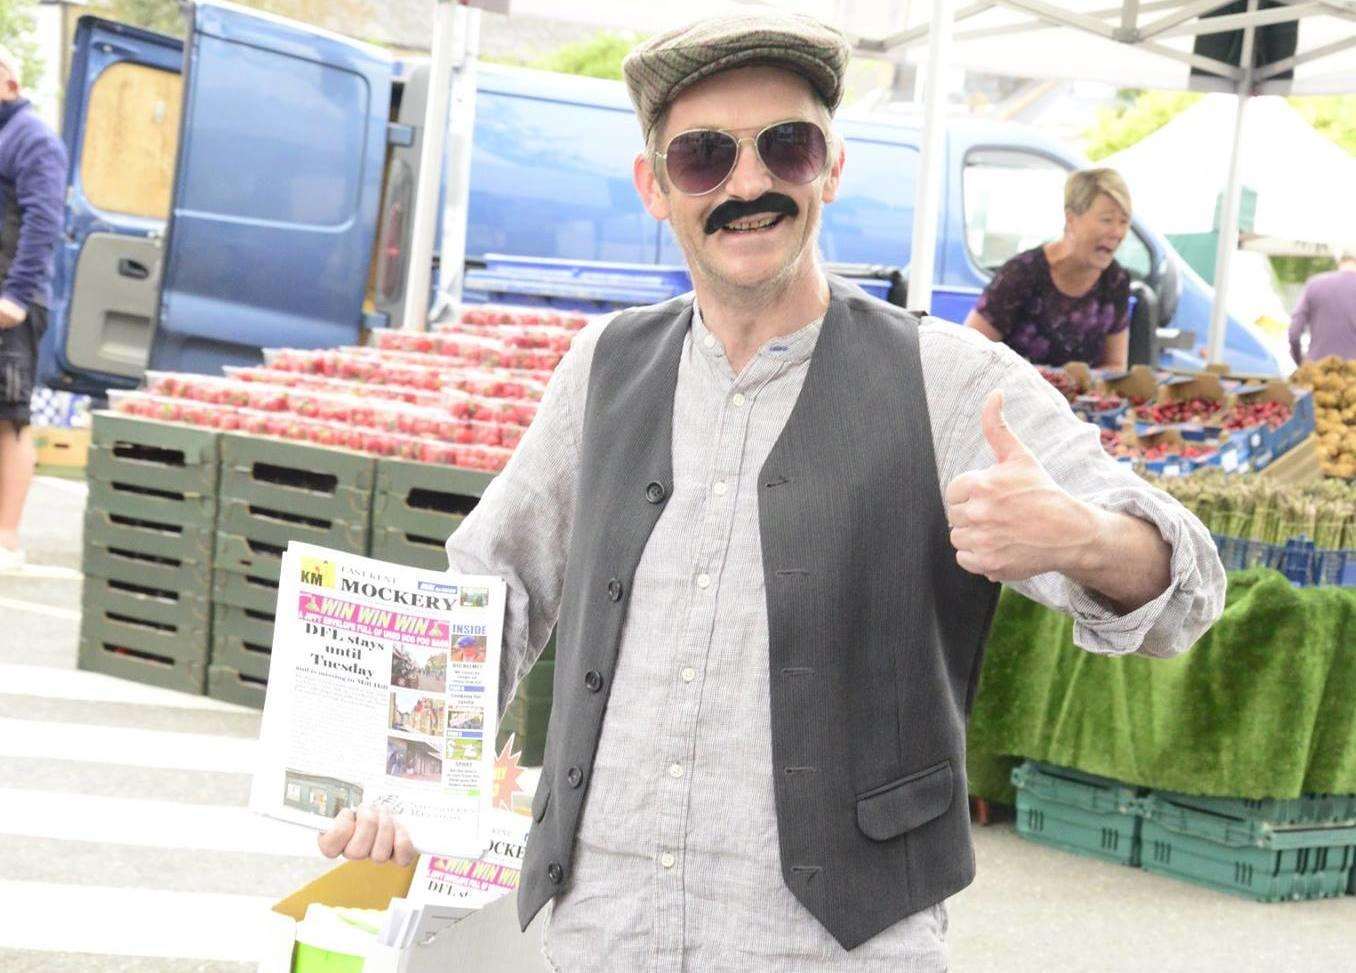 Joe Bangles selling the East Kent Mockery as Joe Bankles at Deal's Saturday Market (3895897)